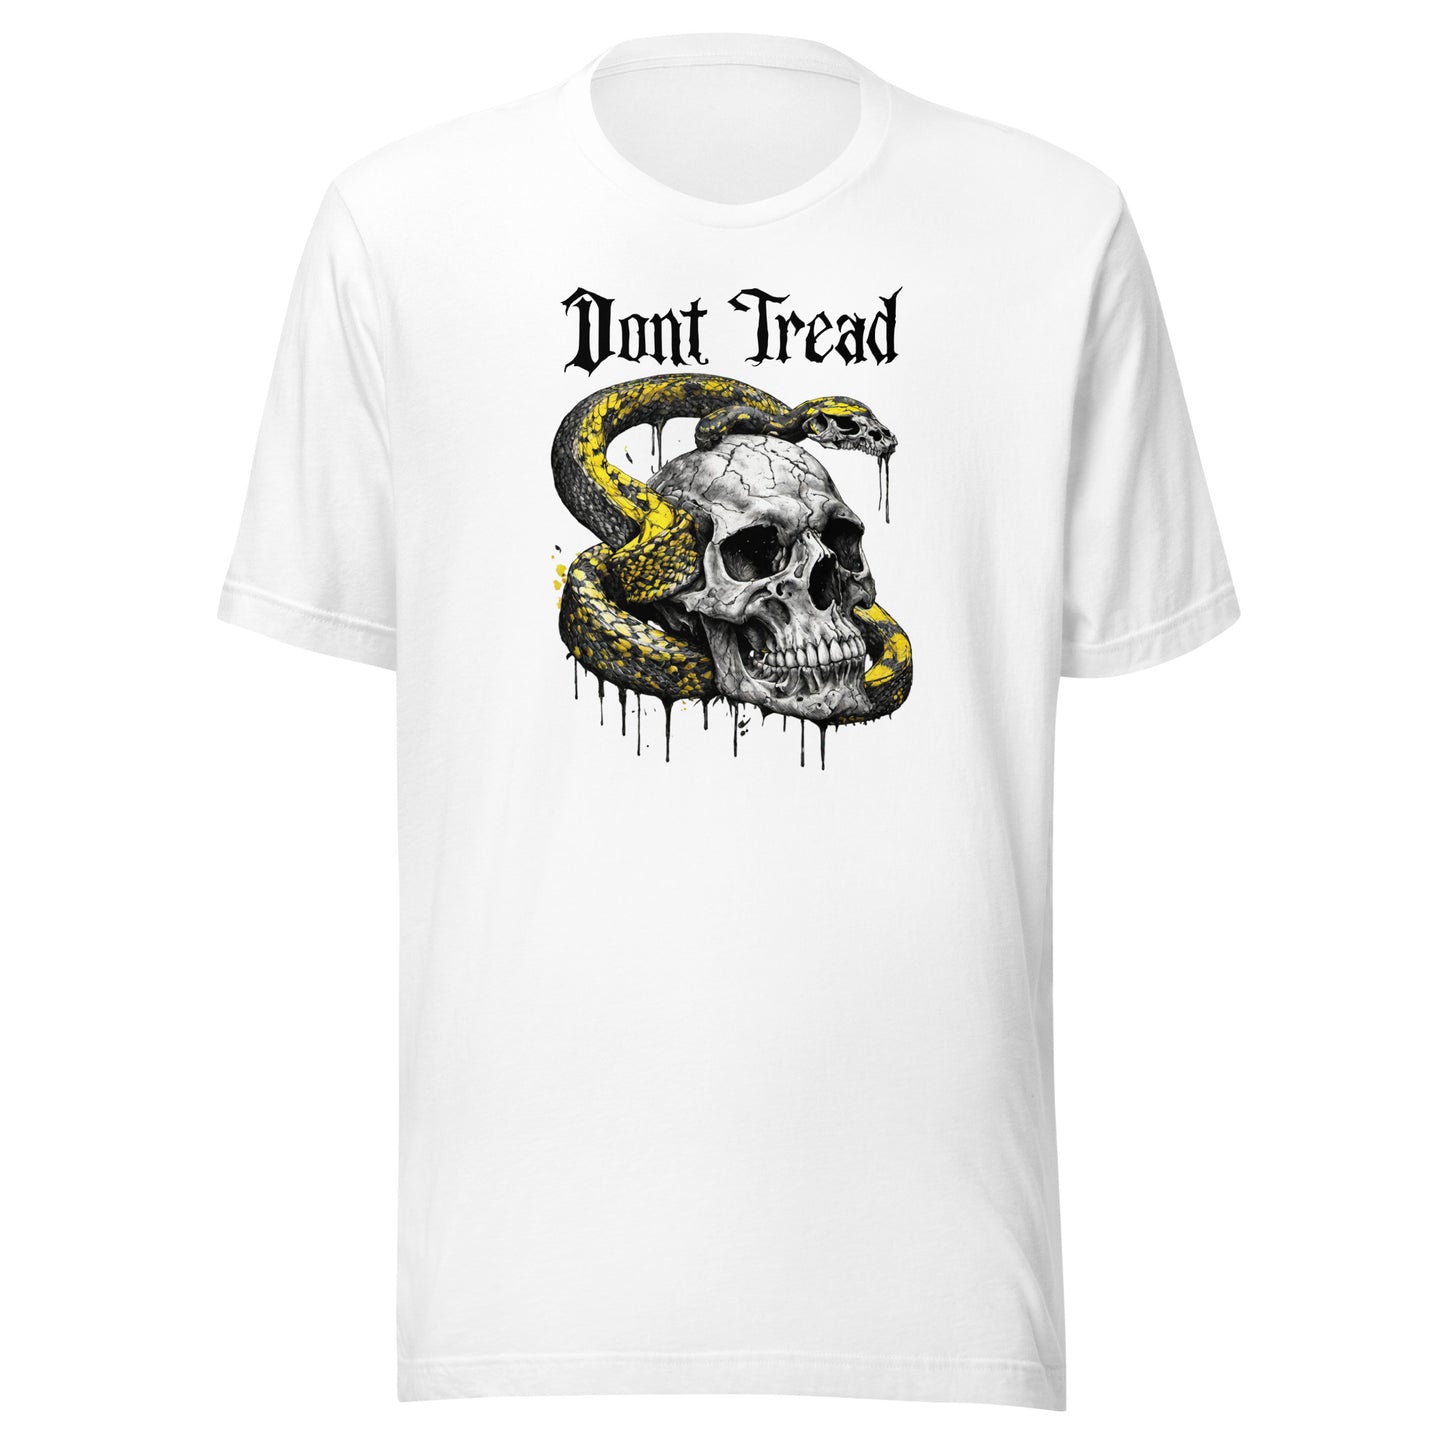 Don't Tread Snake & Skull 2nd Amendment Men's T-Shirt White